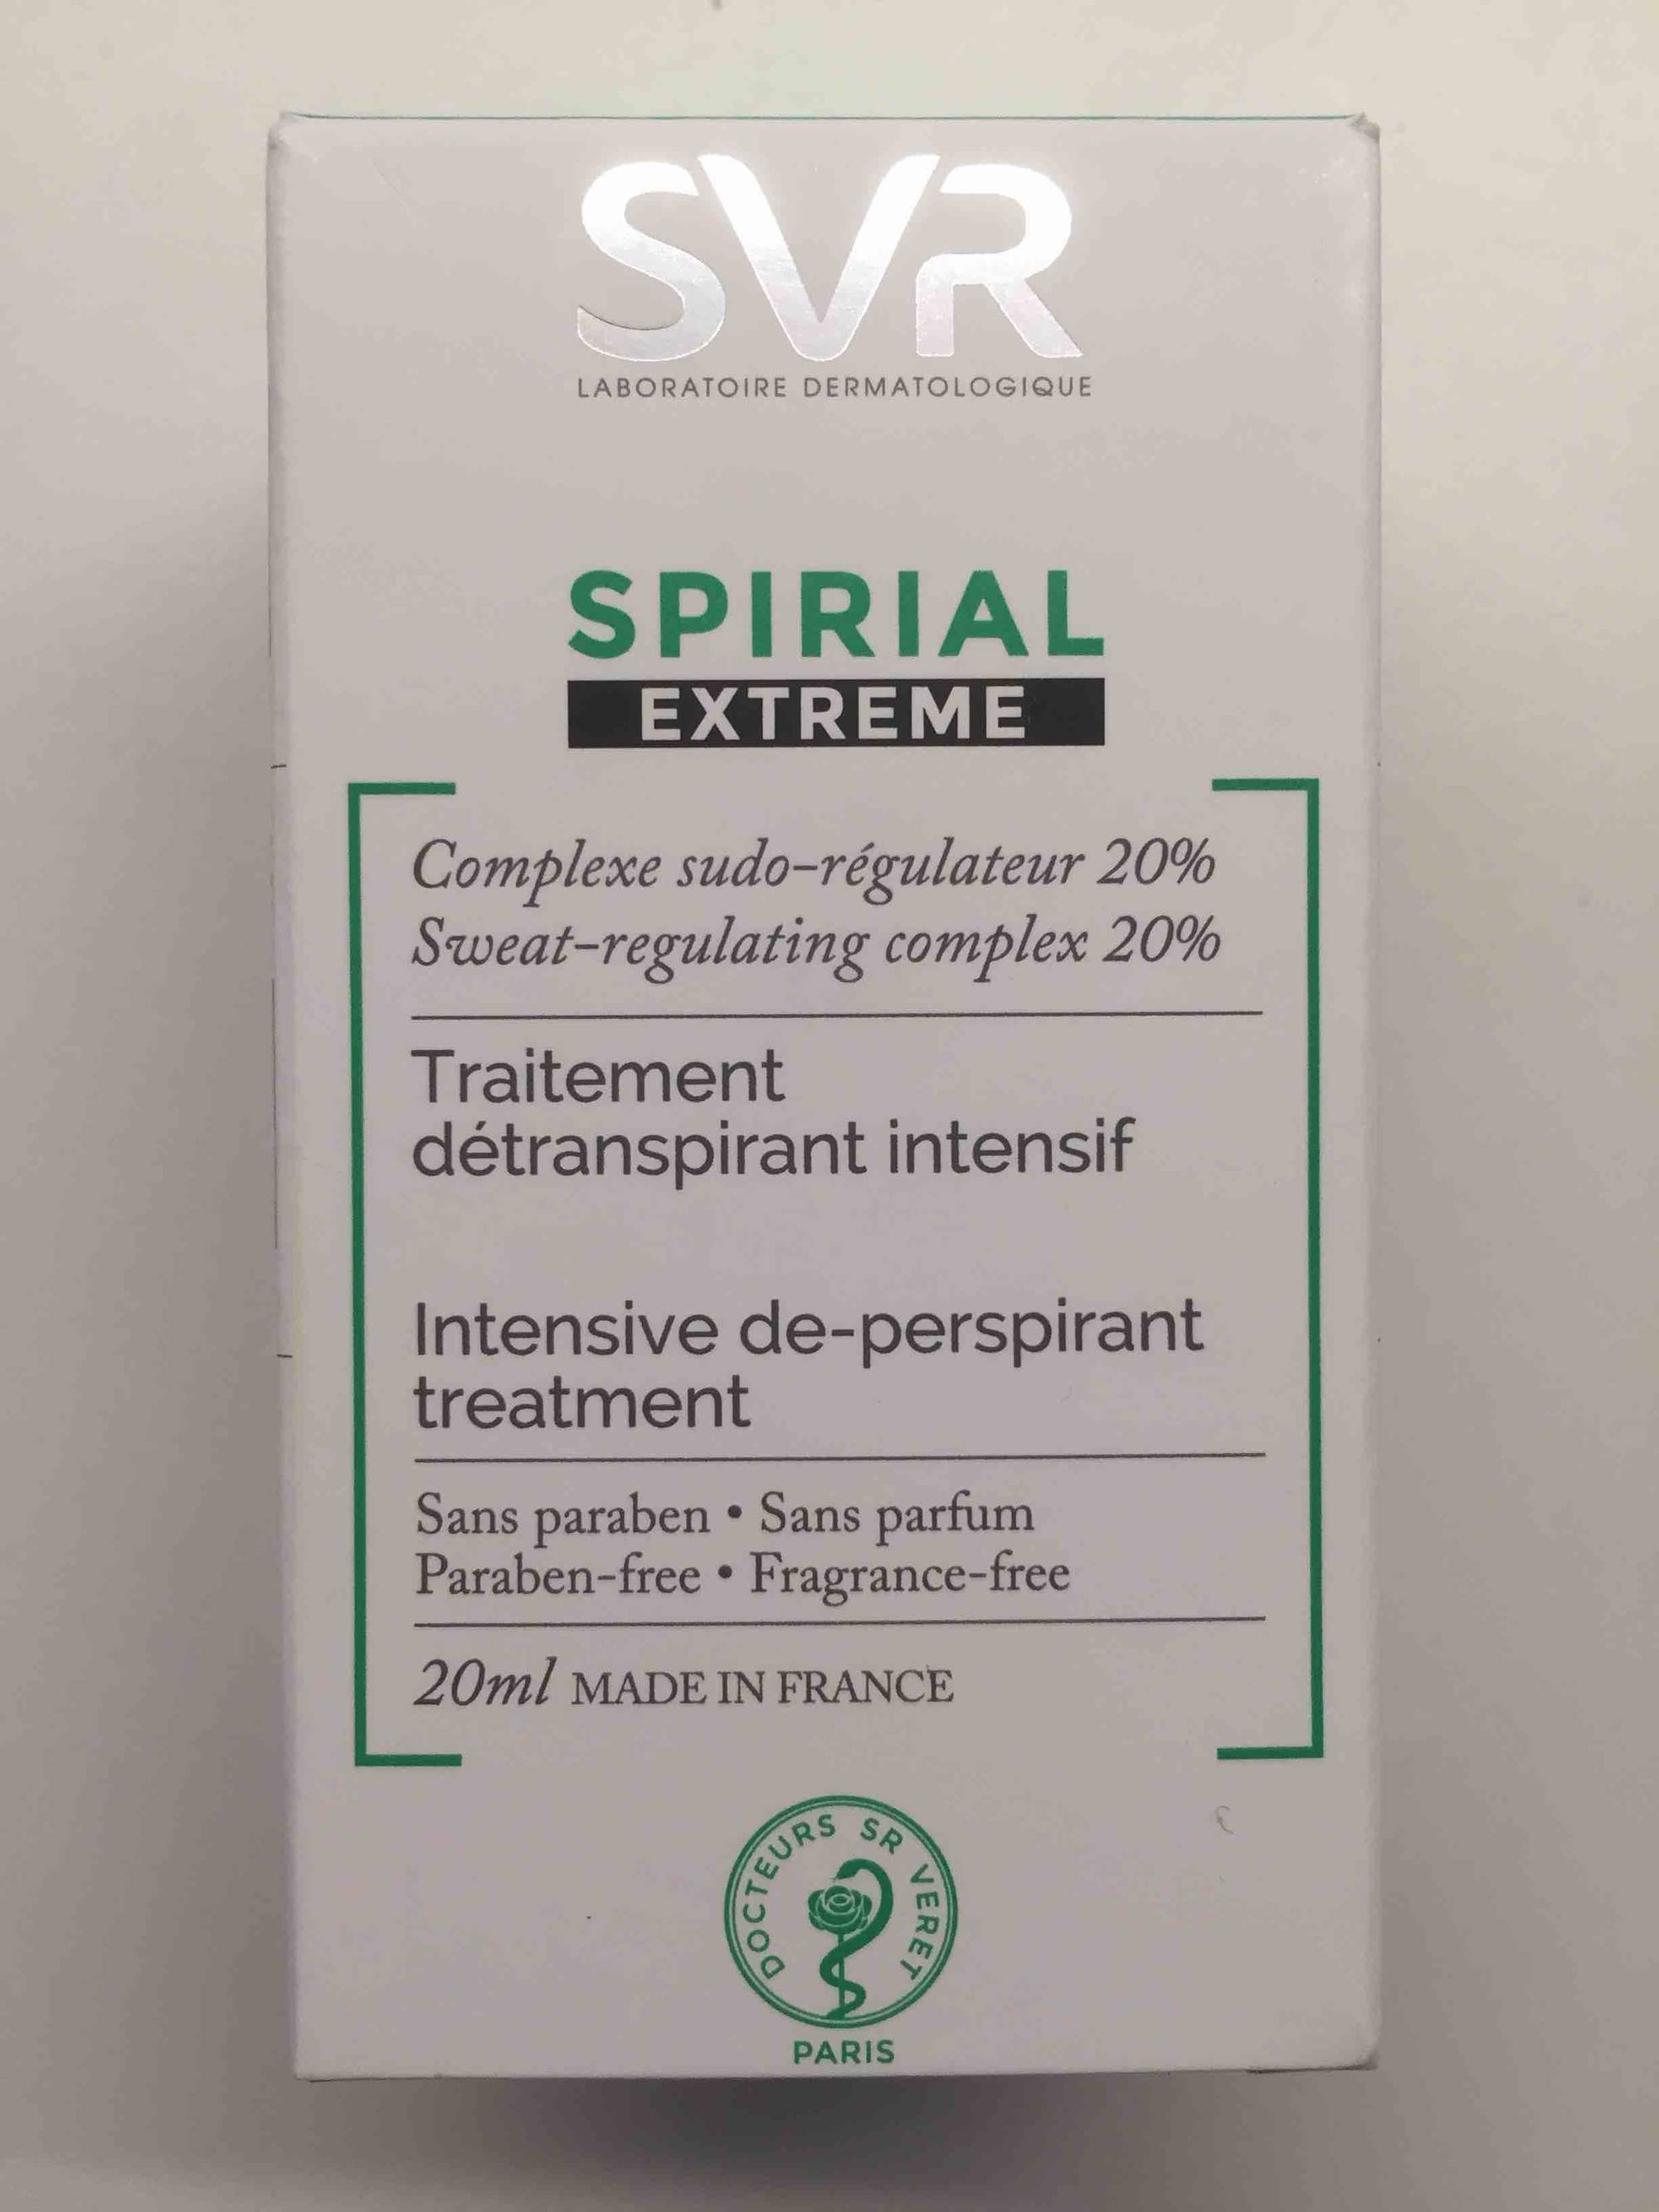 SVR - Spirial extrême - Traitement détranspirant intensif